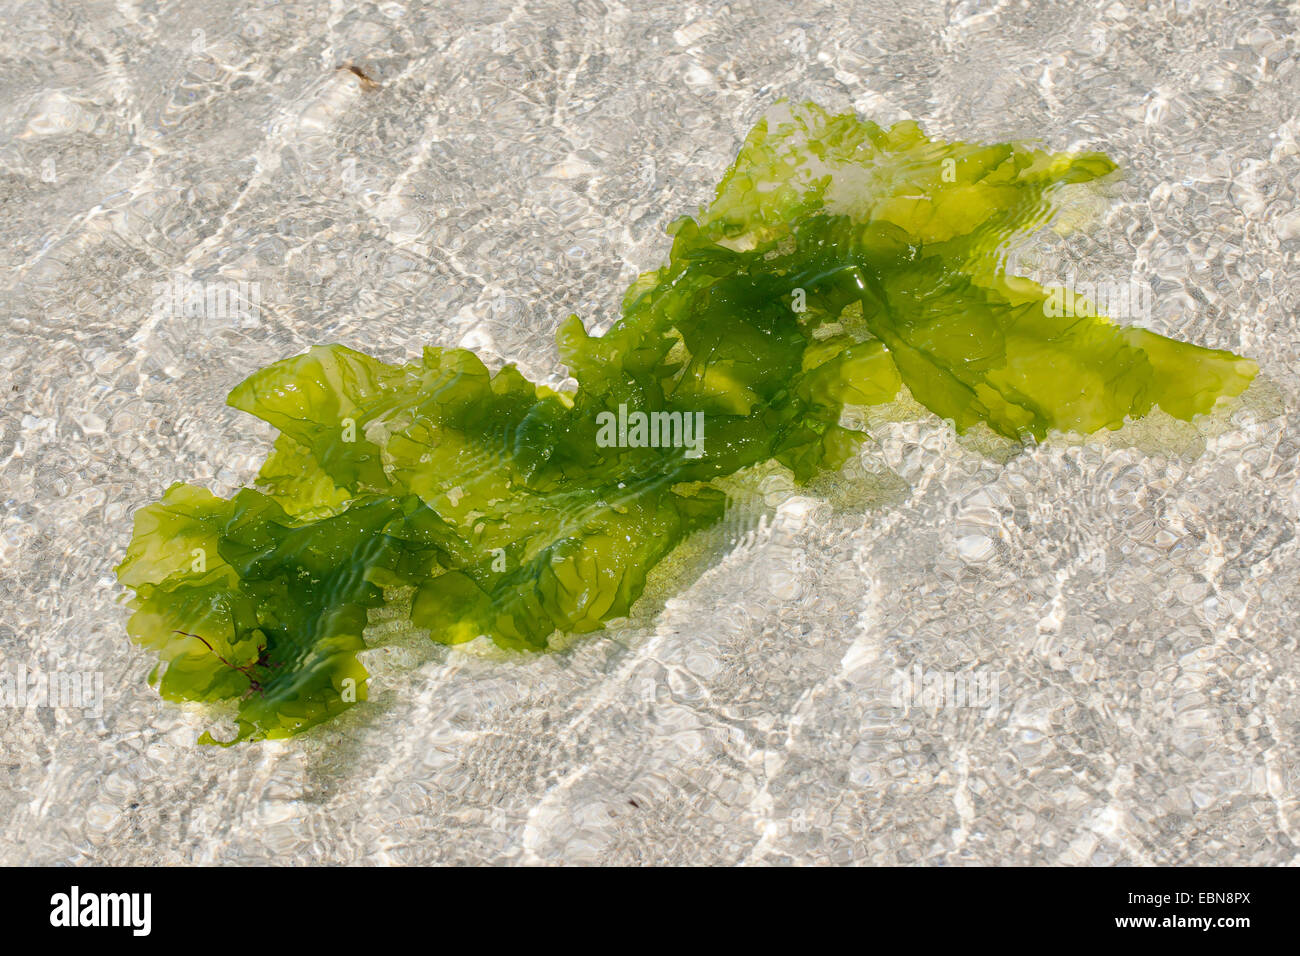 La lechuga de mar (Ulva lactuca), flotan en el agua del mar, Alemania Foto de stock